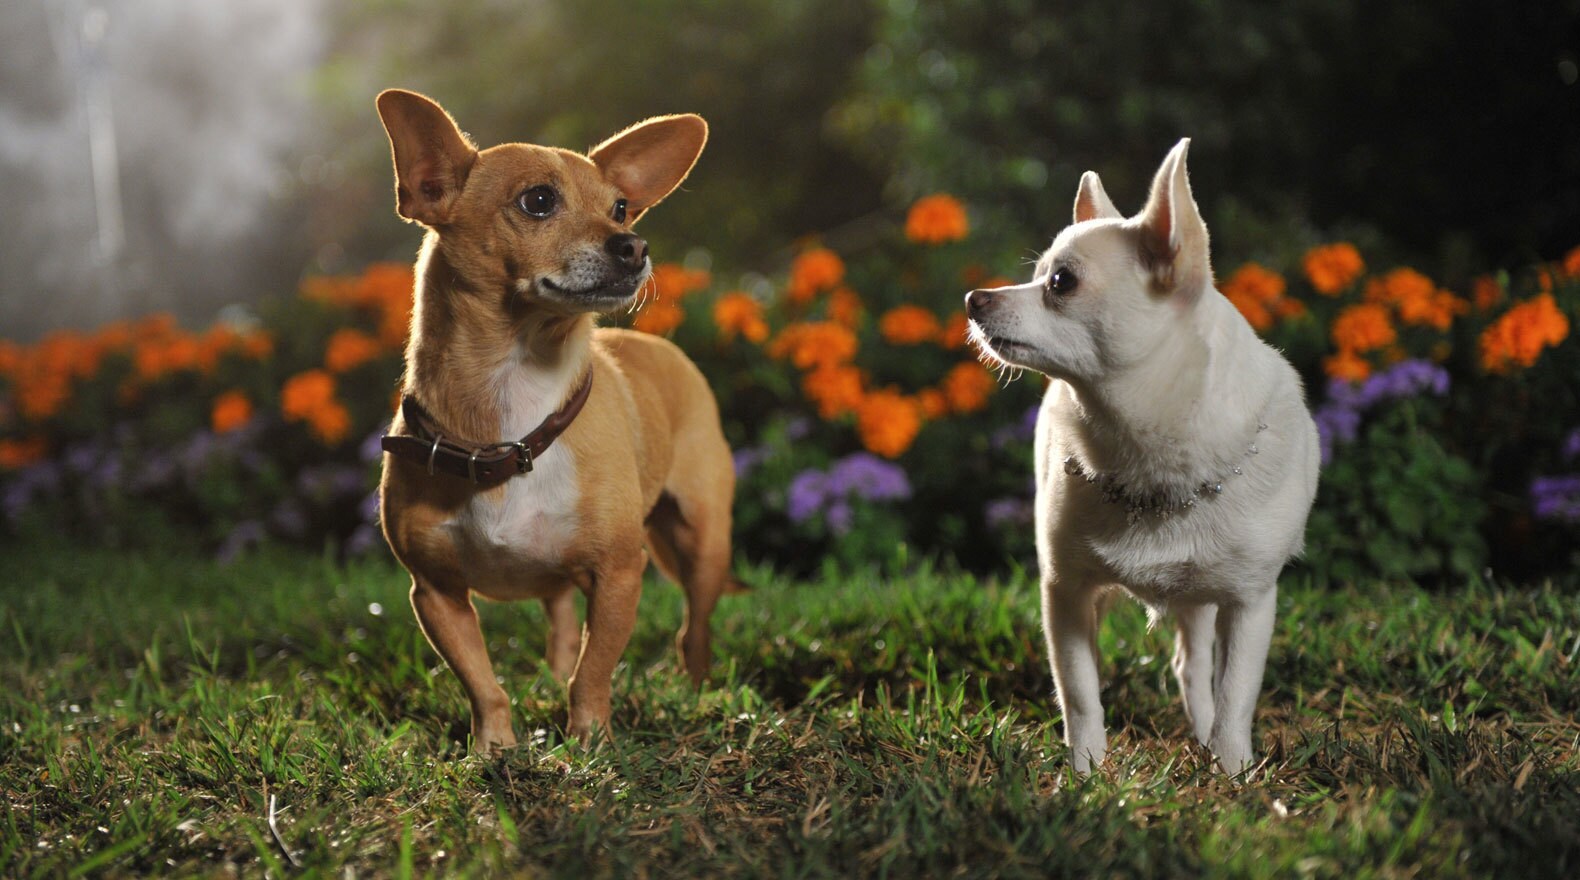 Chihuahuas Papi and Chloe take a walk through the garden